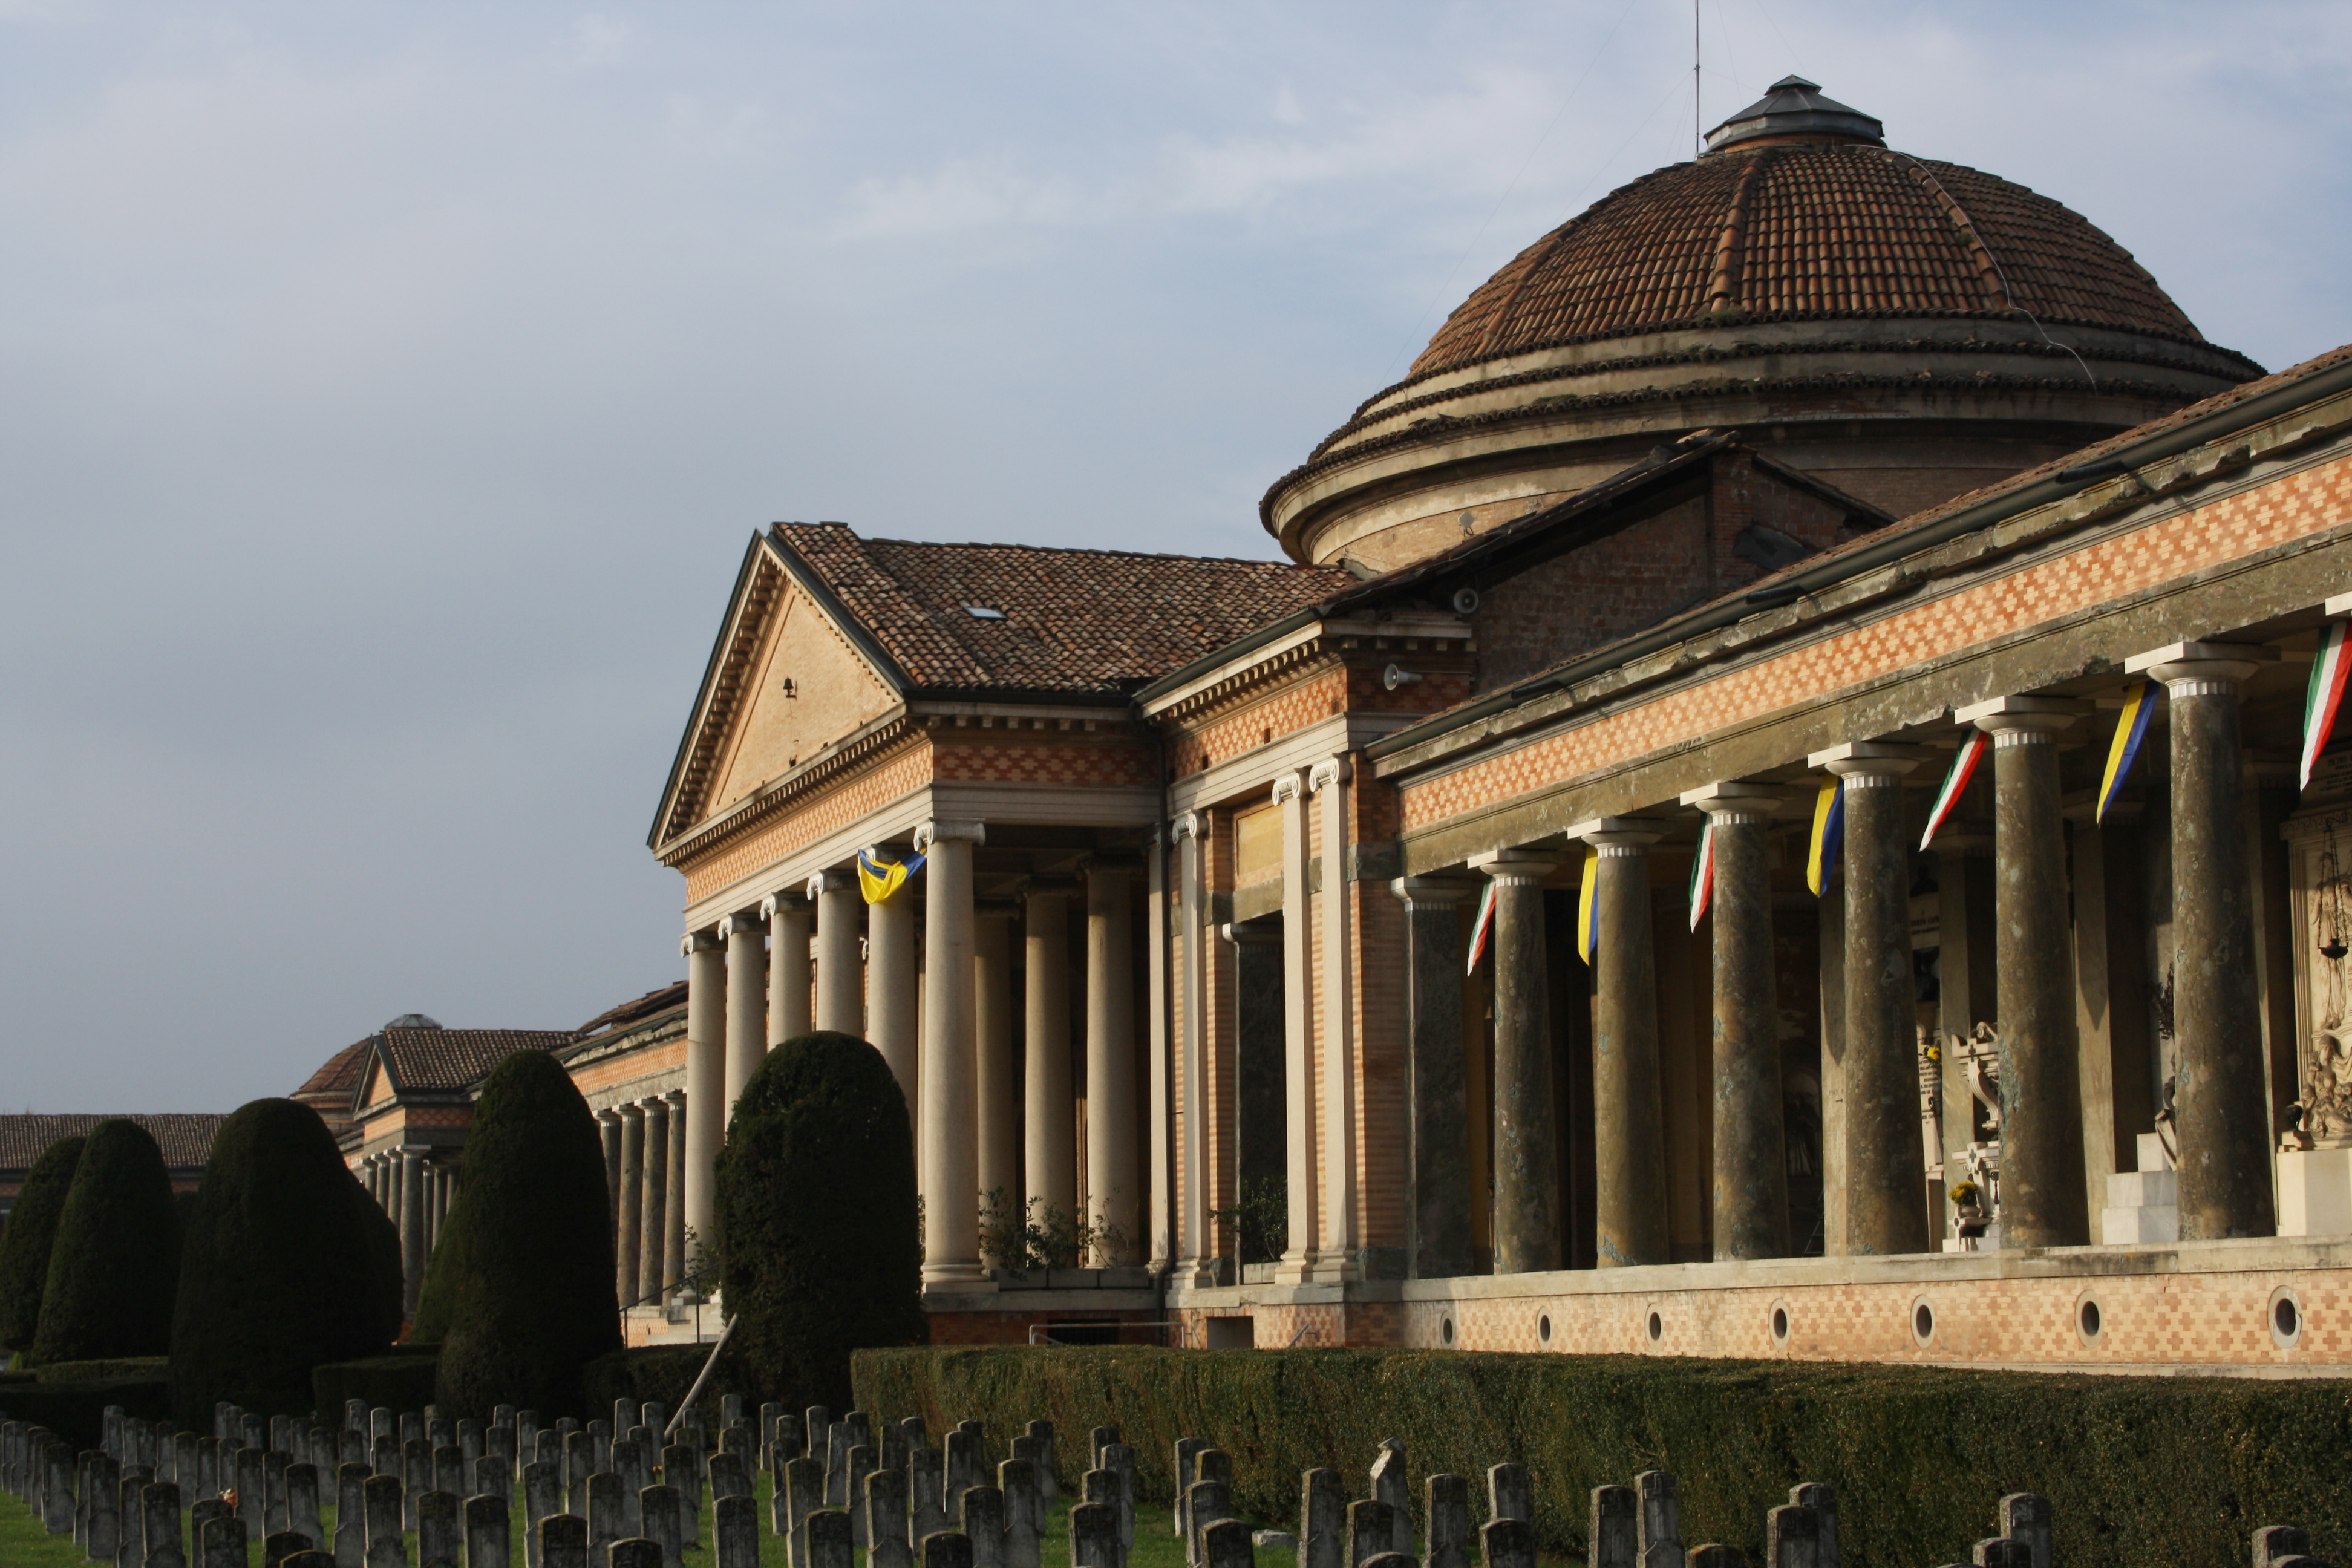 foto: https://upload.wikimedia.org/wikipedia/commons/c/c0/Modena%2C_Cimitero_Monumentale_San_Cataldo.JPG